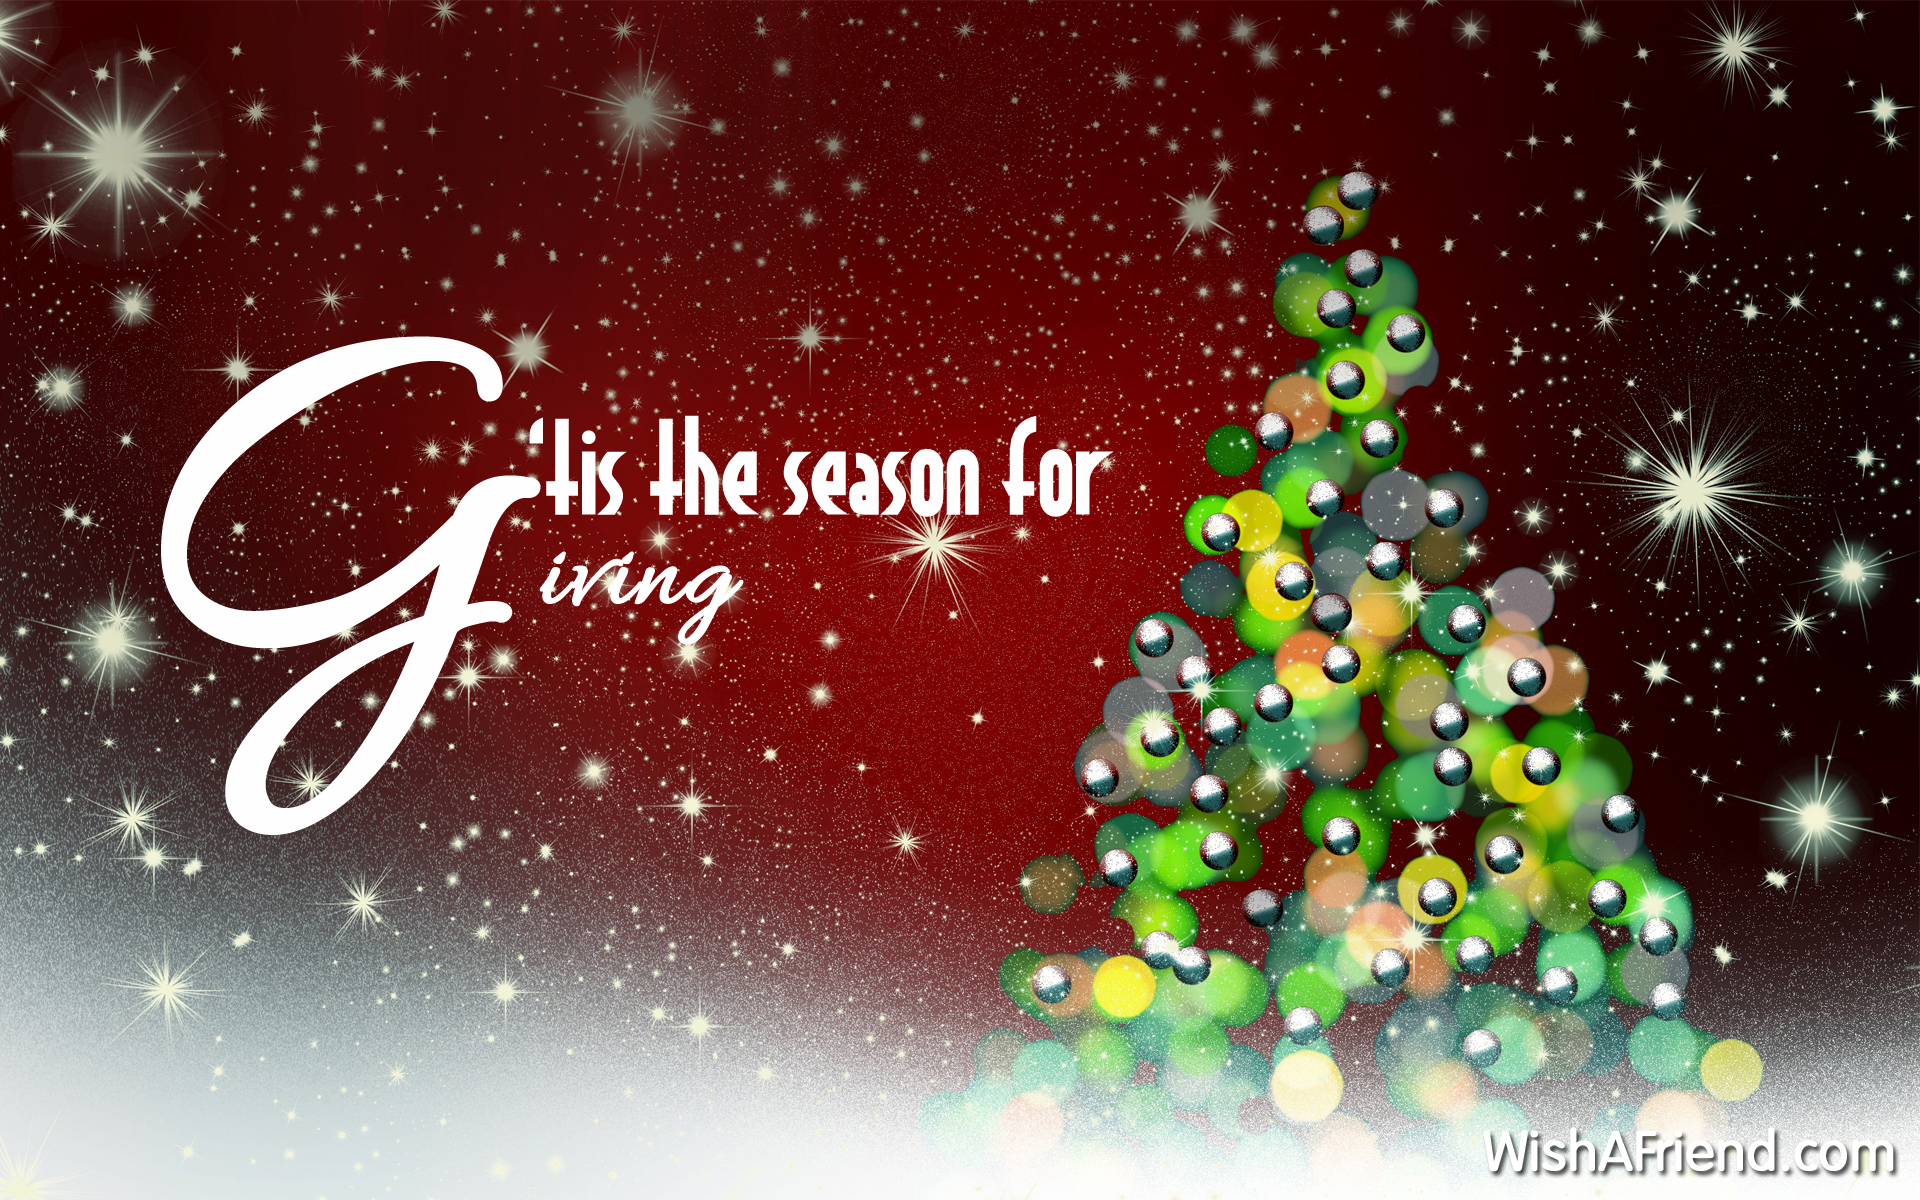 tis the season for giving